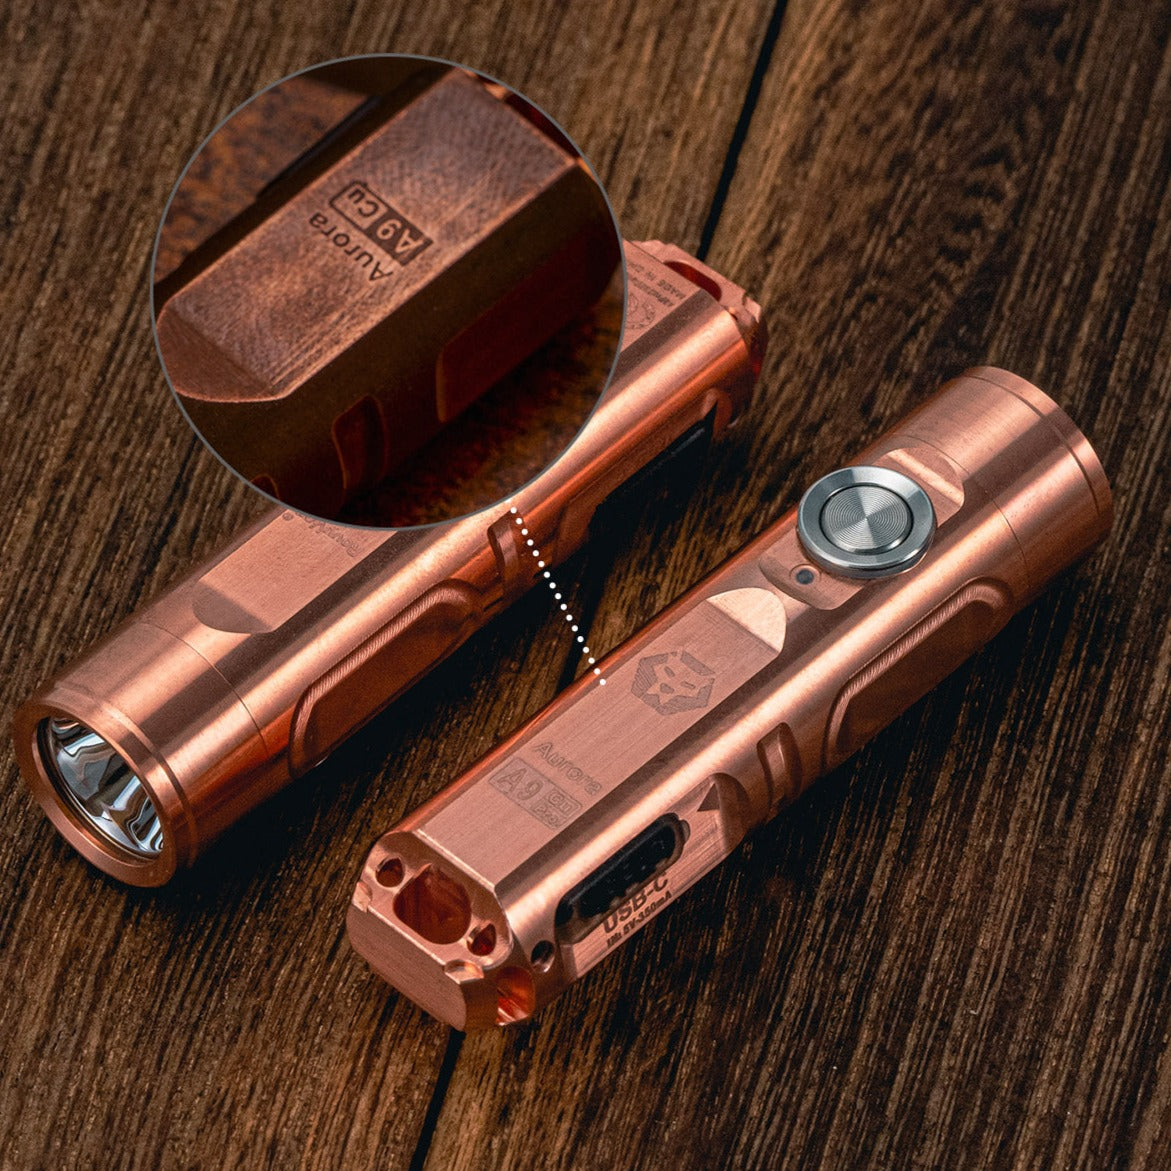 Aurora A9 Pro (G4) EDC Copper Keychain Flashlight